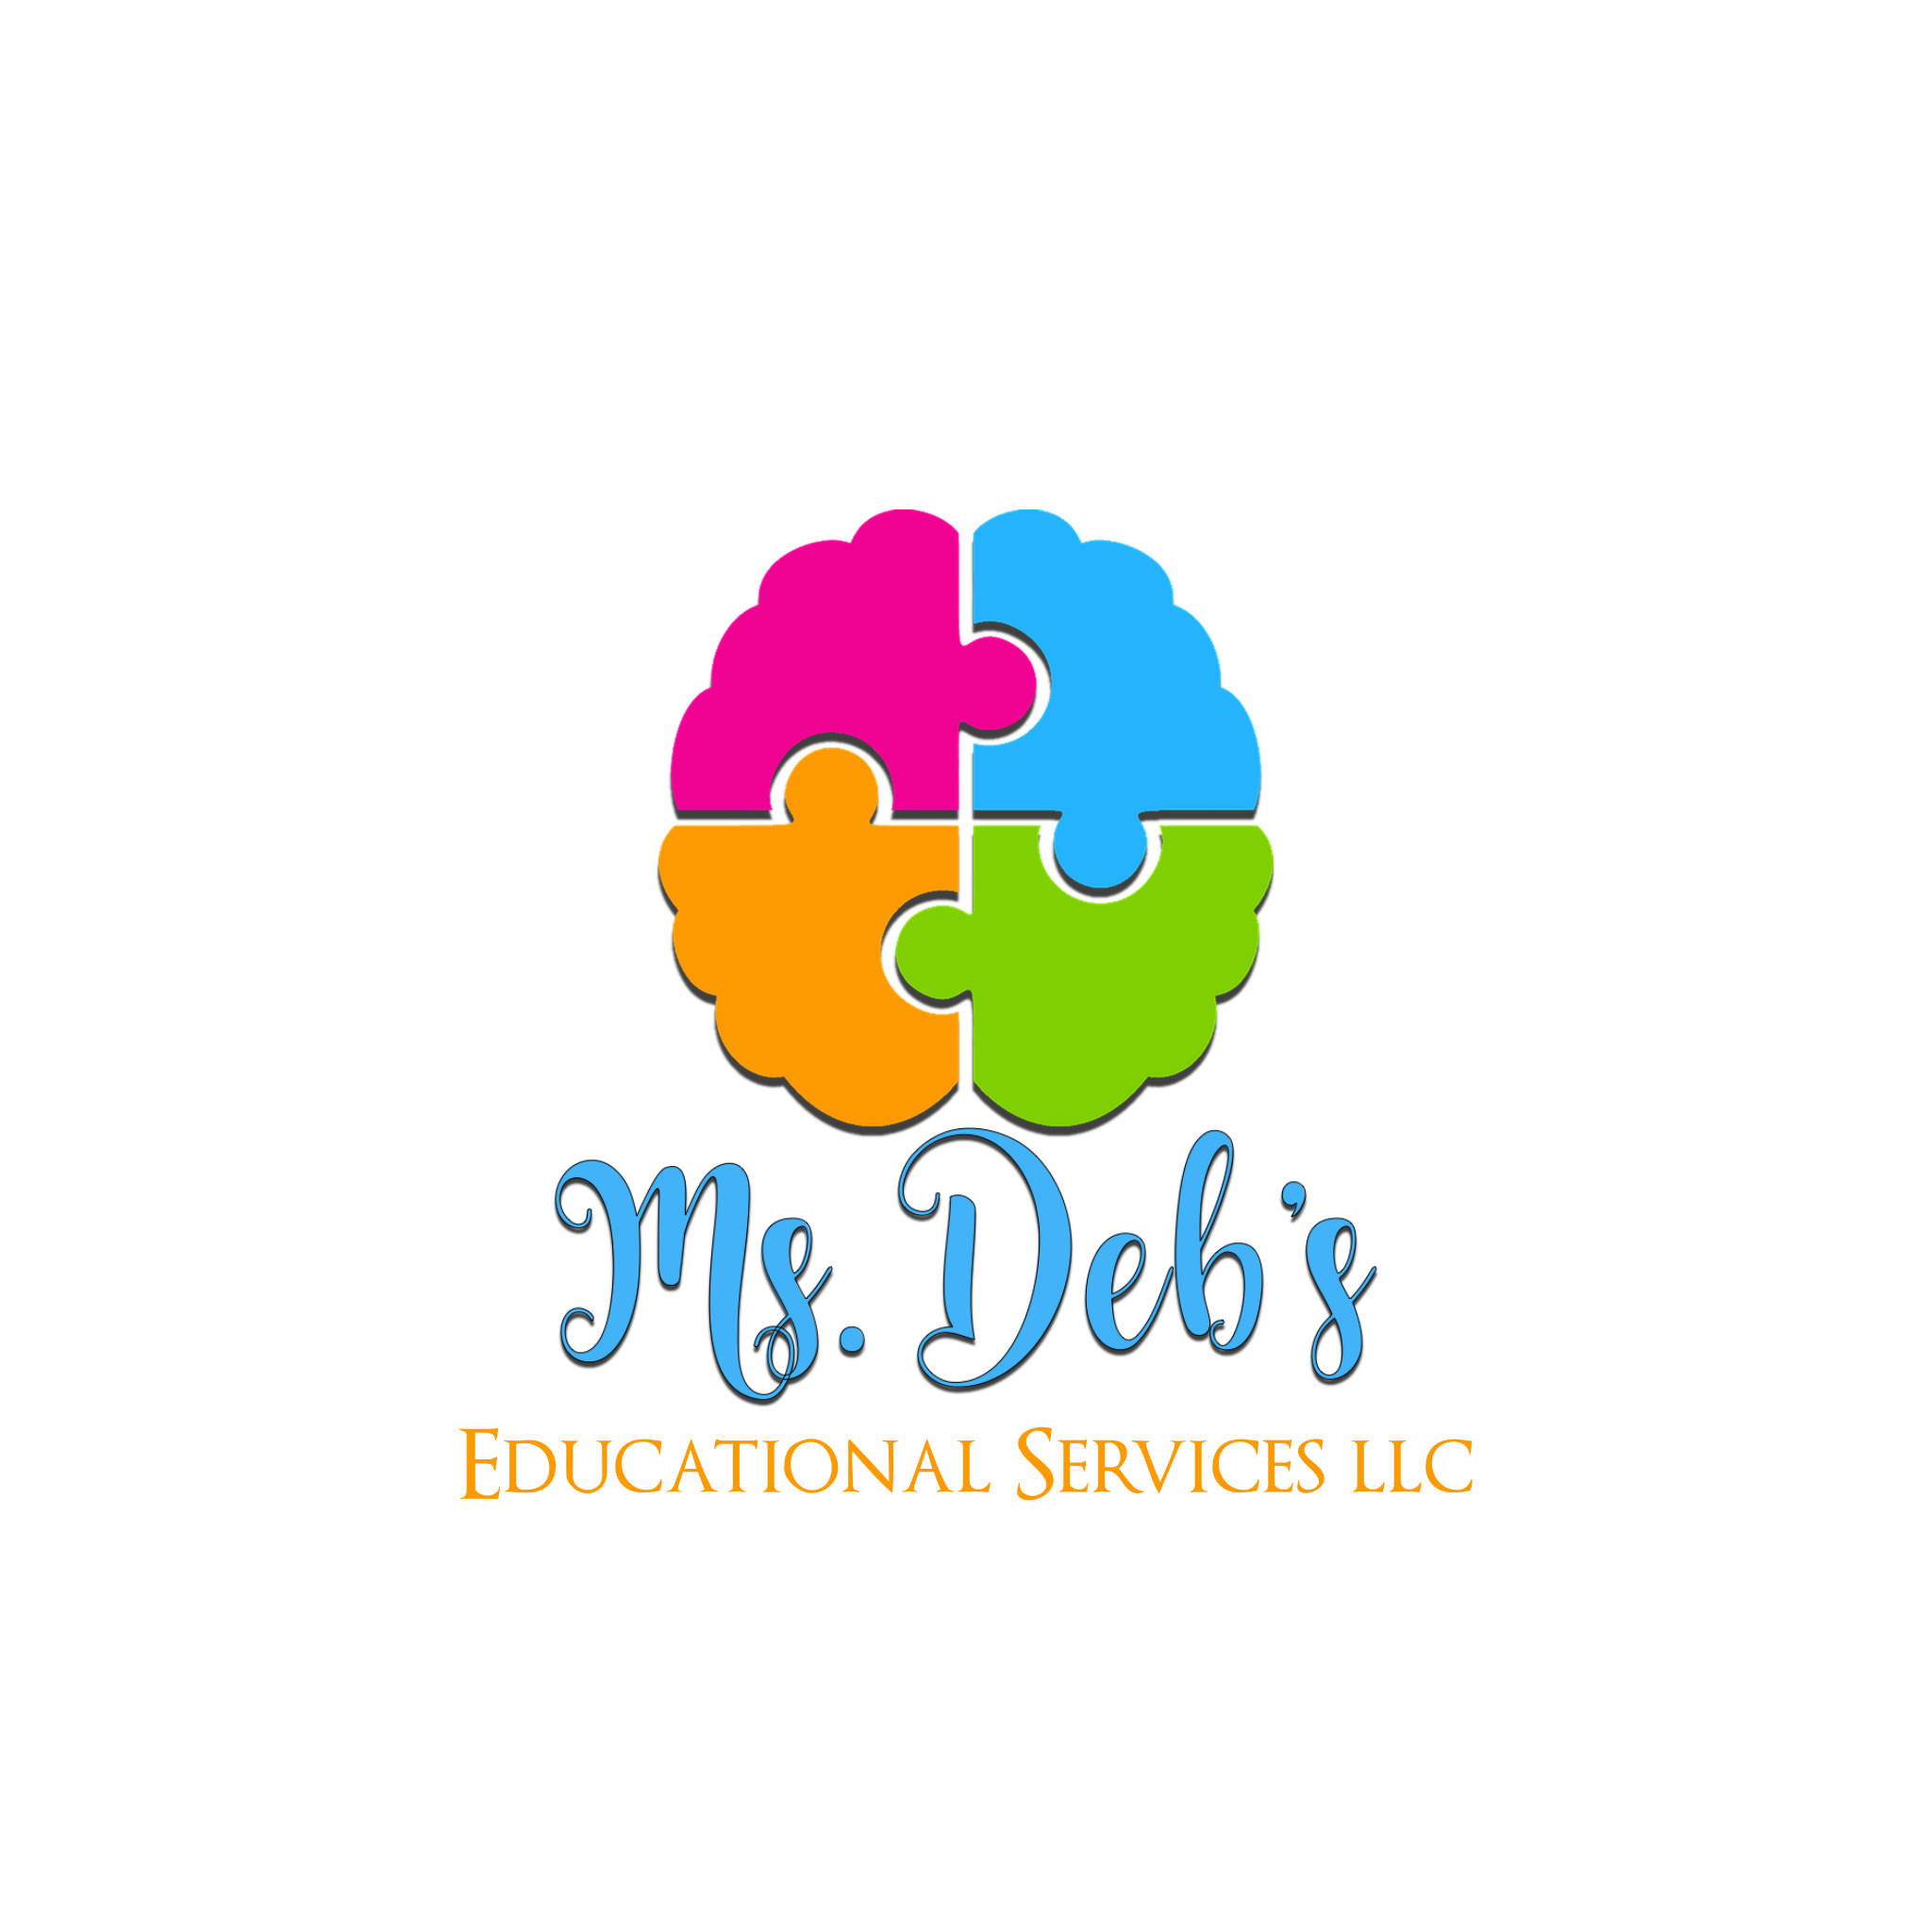 Ms. Deb's Educational Services LLC logo